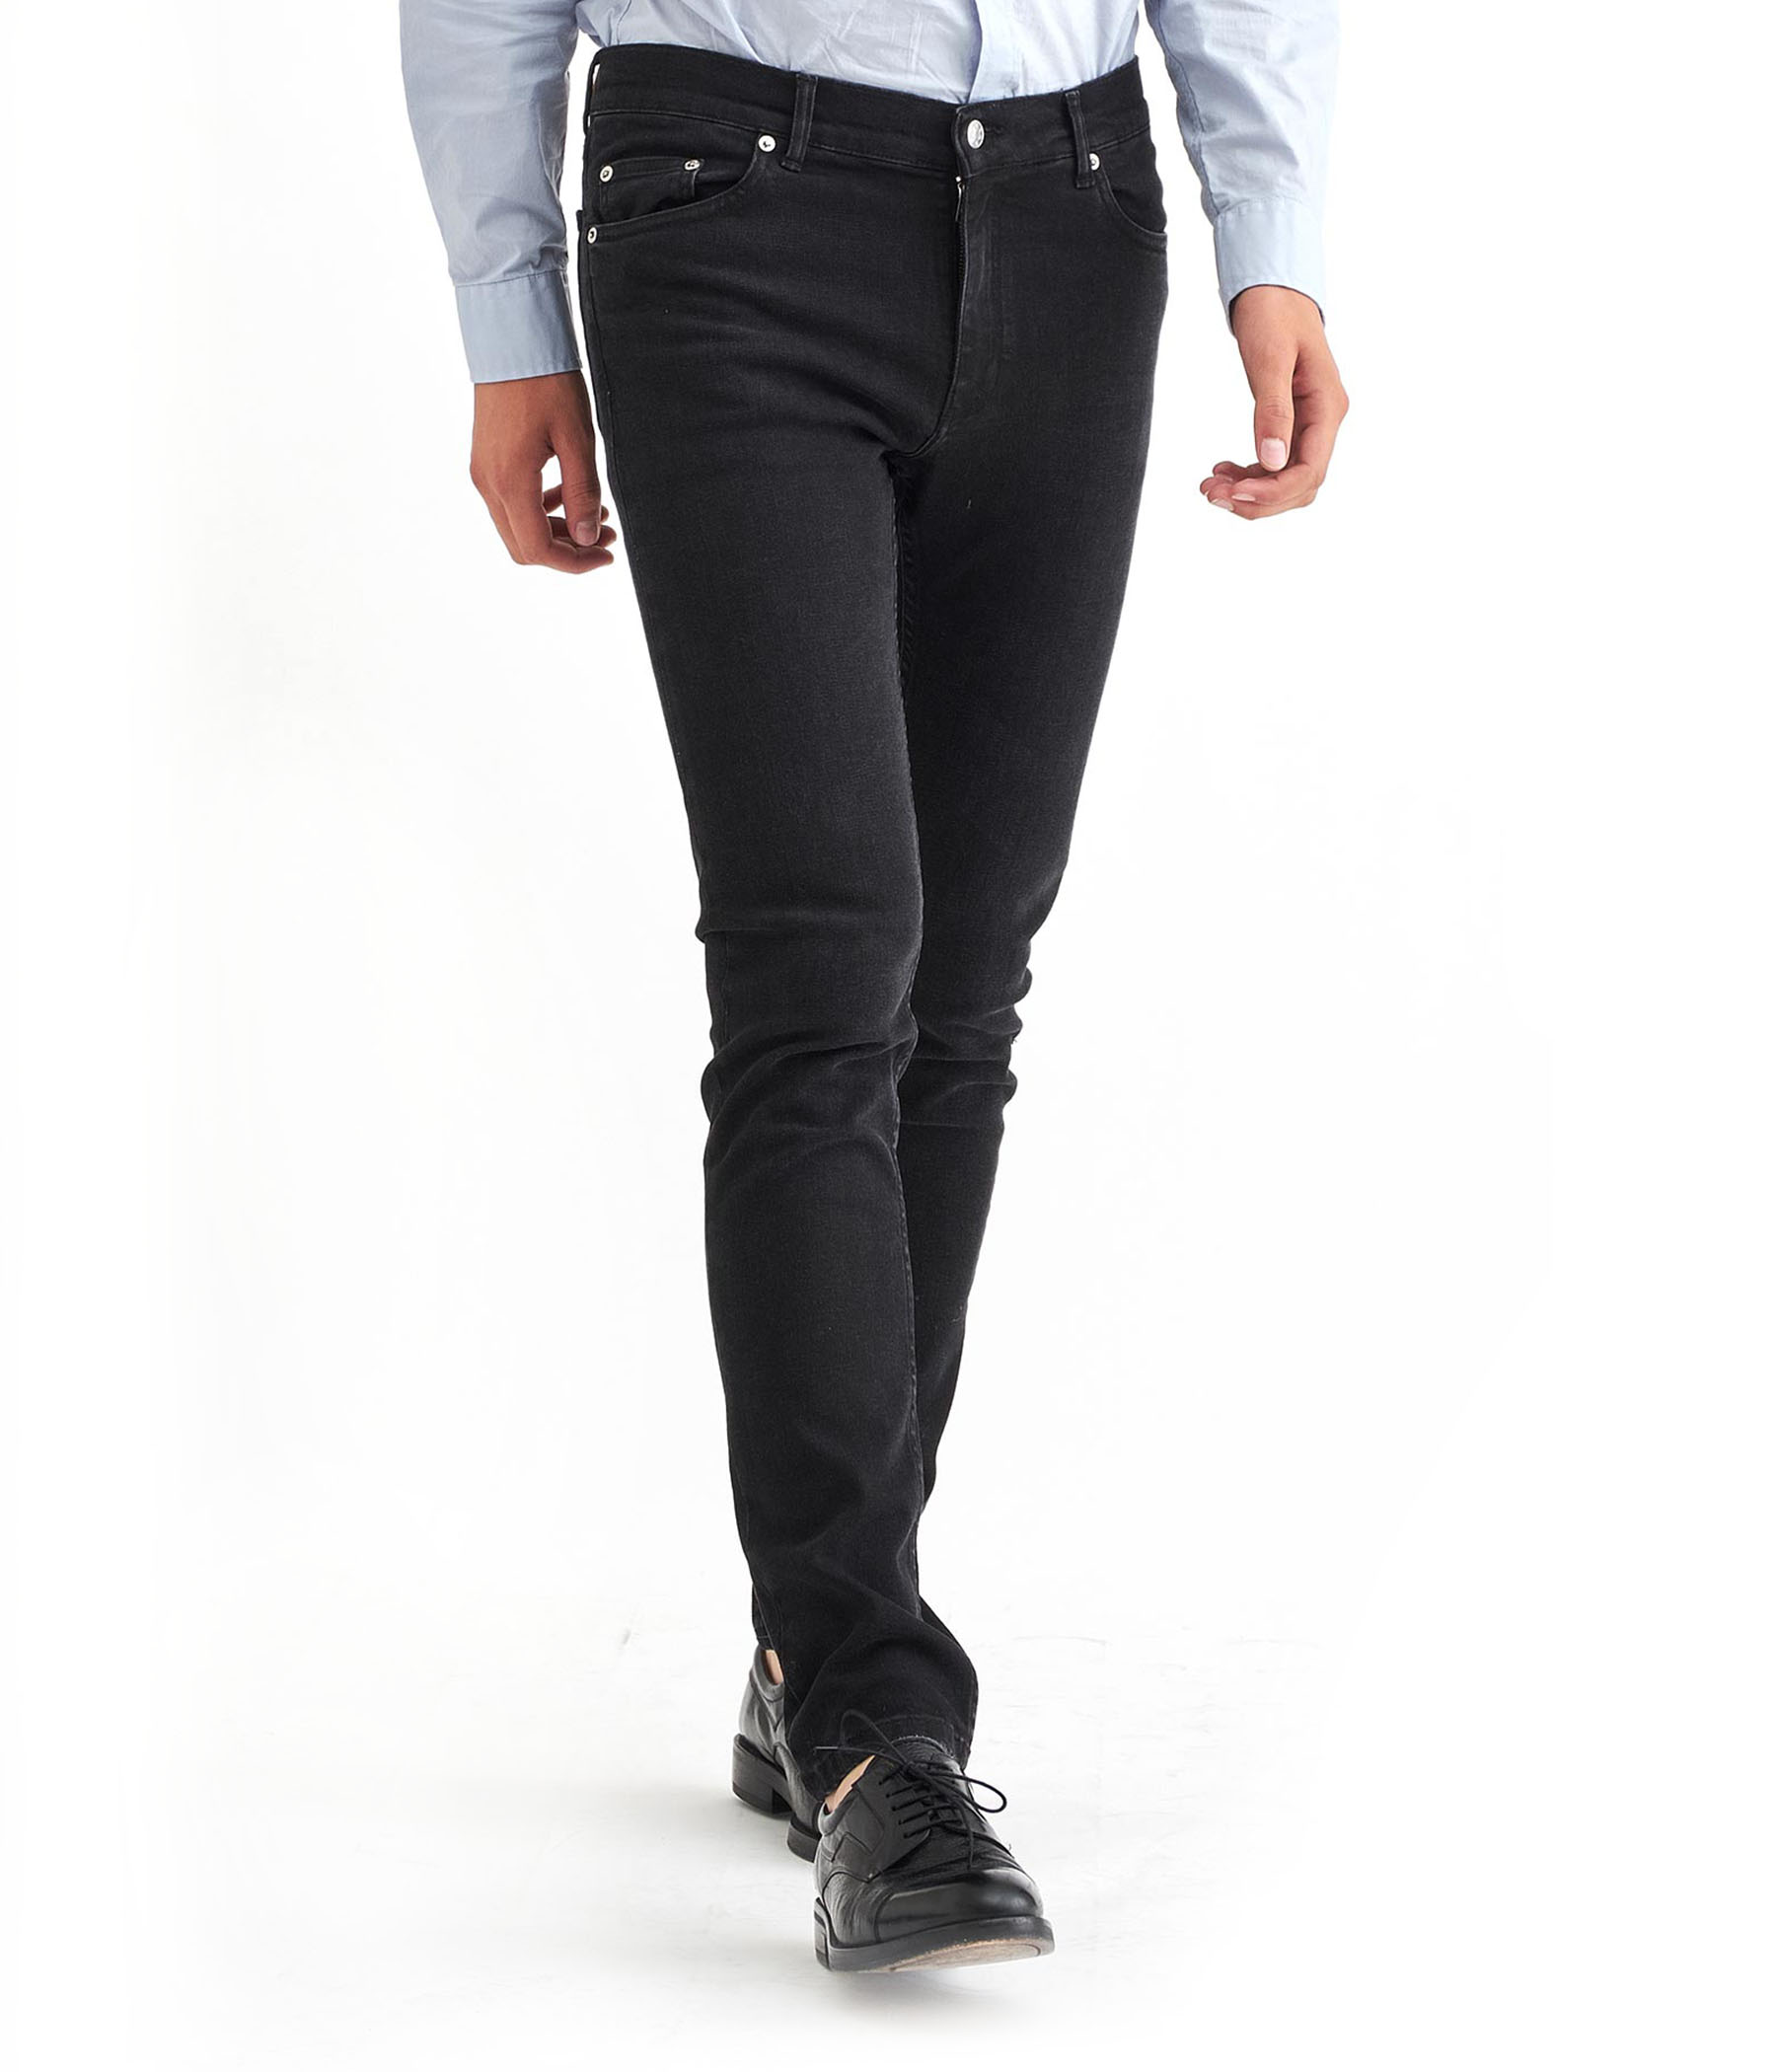 black velour jeans